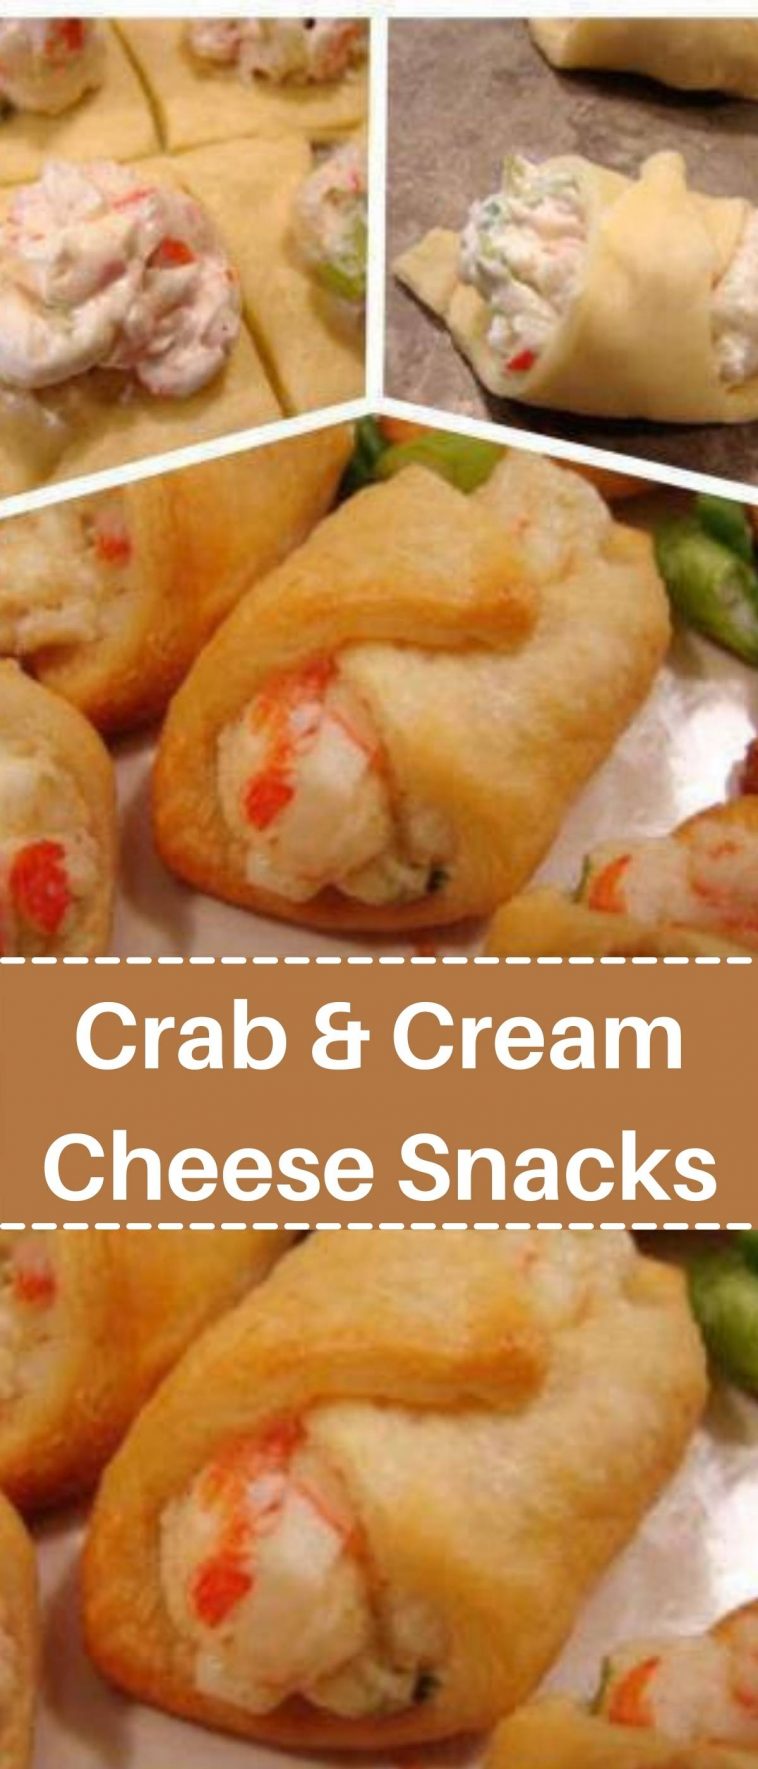 Crab & Cream Cheese Snacks